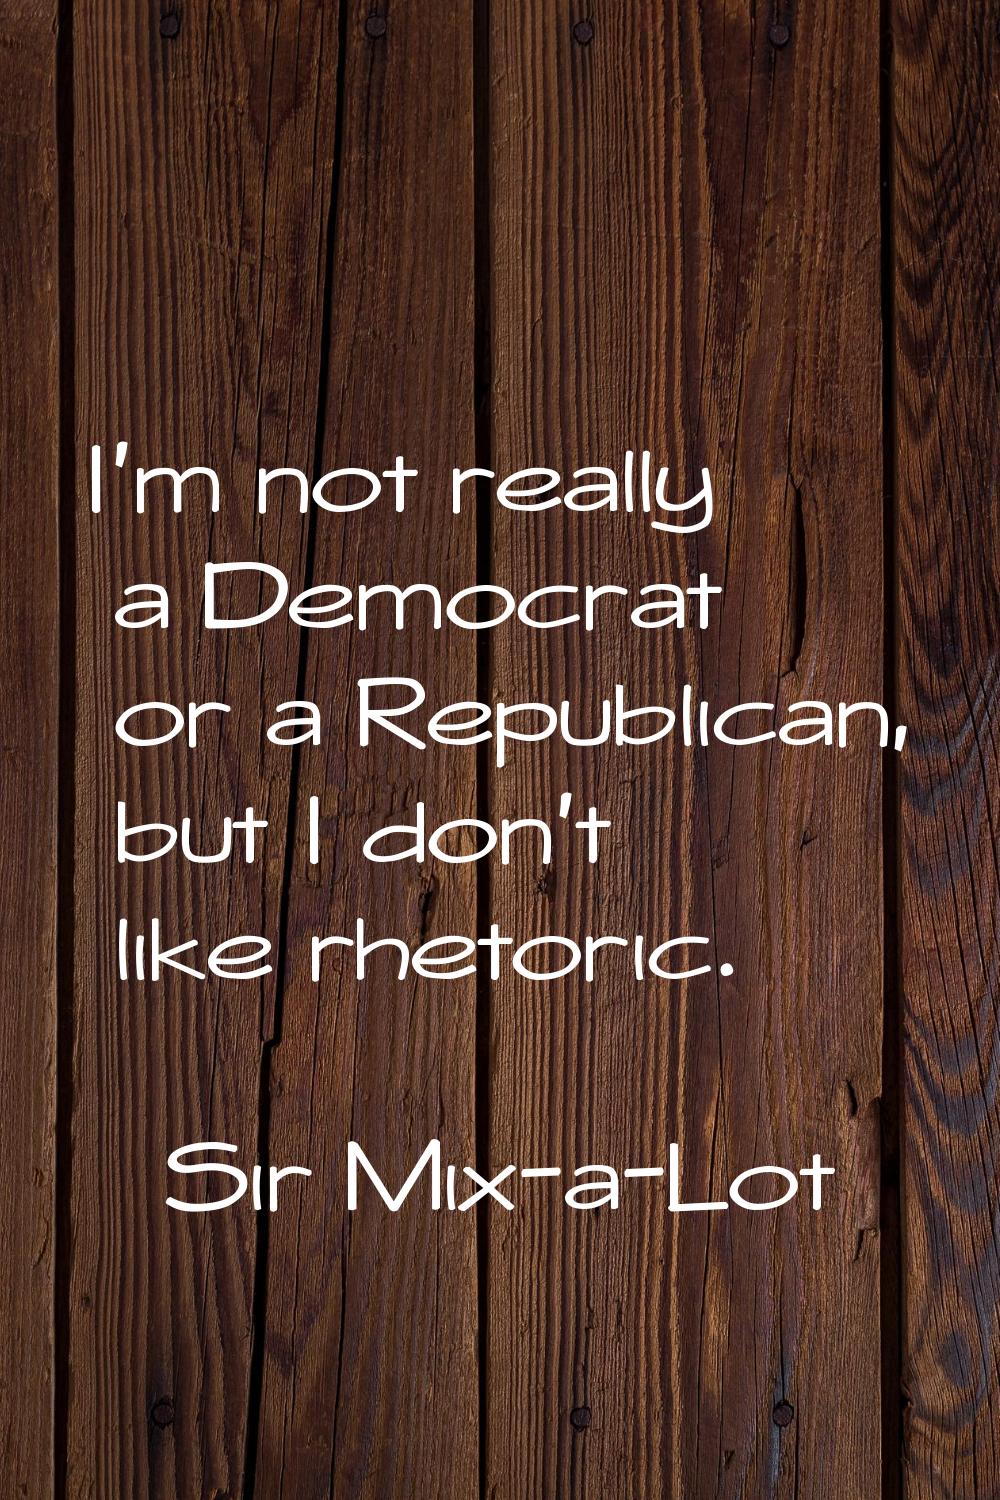 I'm not really a Democrat or a Republican, but I don't like rhetoric.